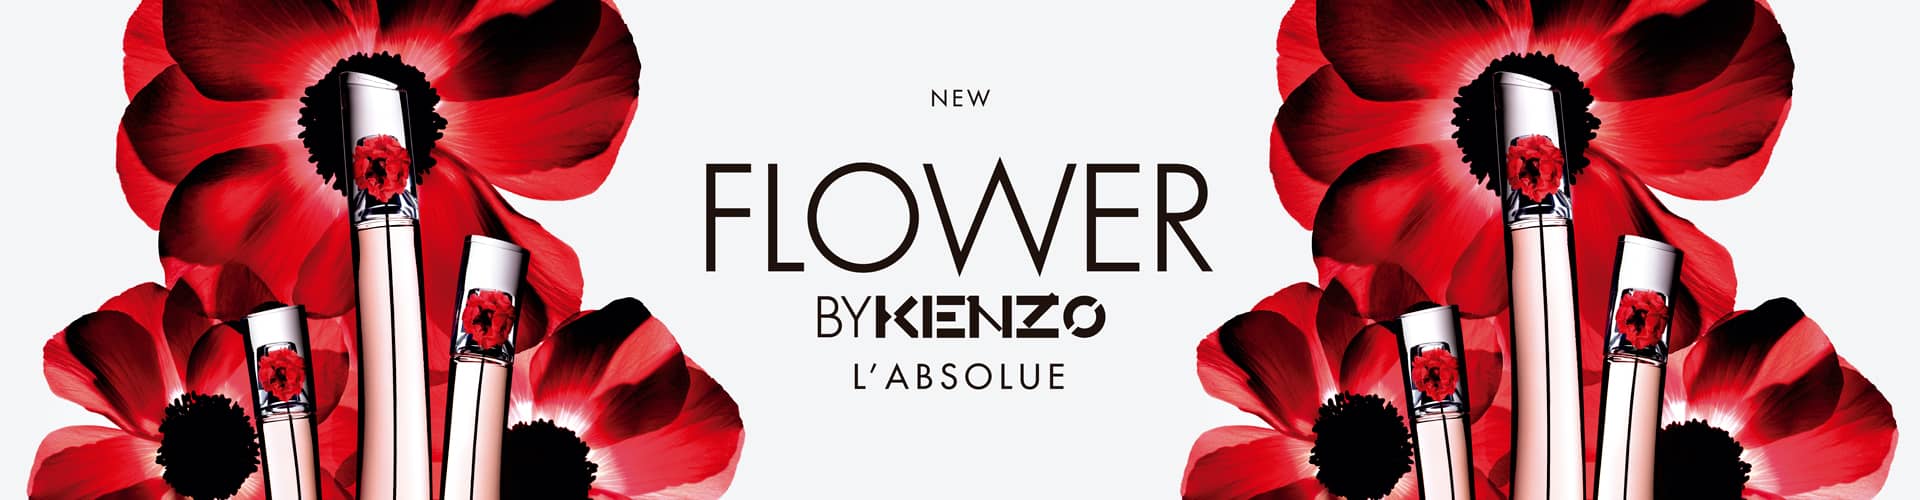 Flower by Kenzo L'Absolue | Nuevo Perfume de Mujer | Prieto.es